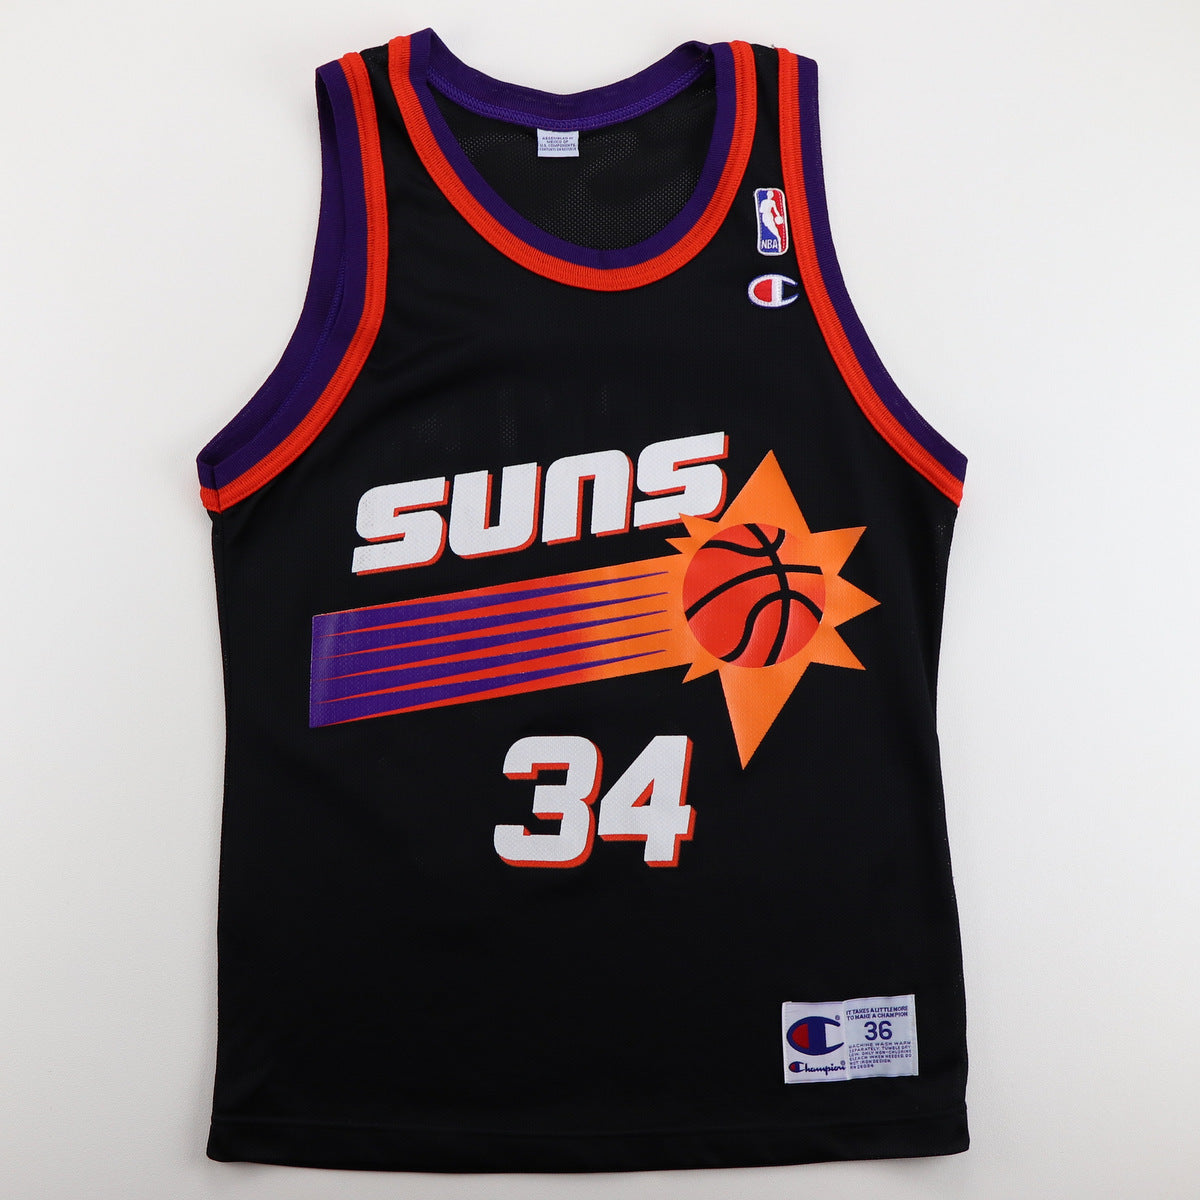 The Charles Barkley Era: Phoenix Suns Basketball at Its Best